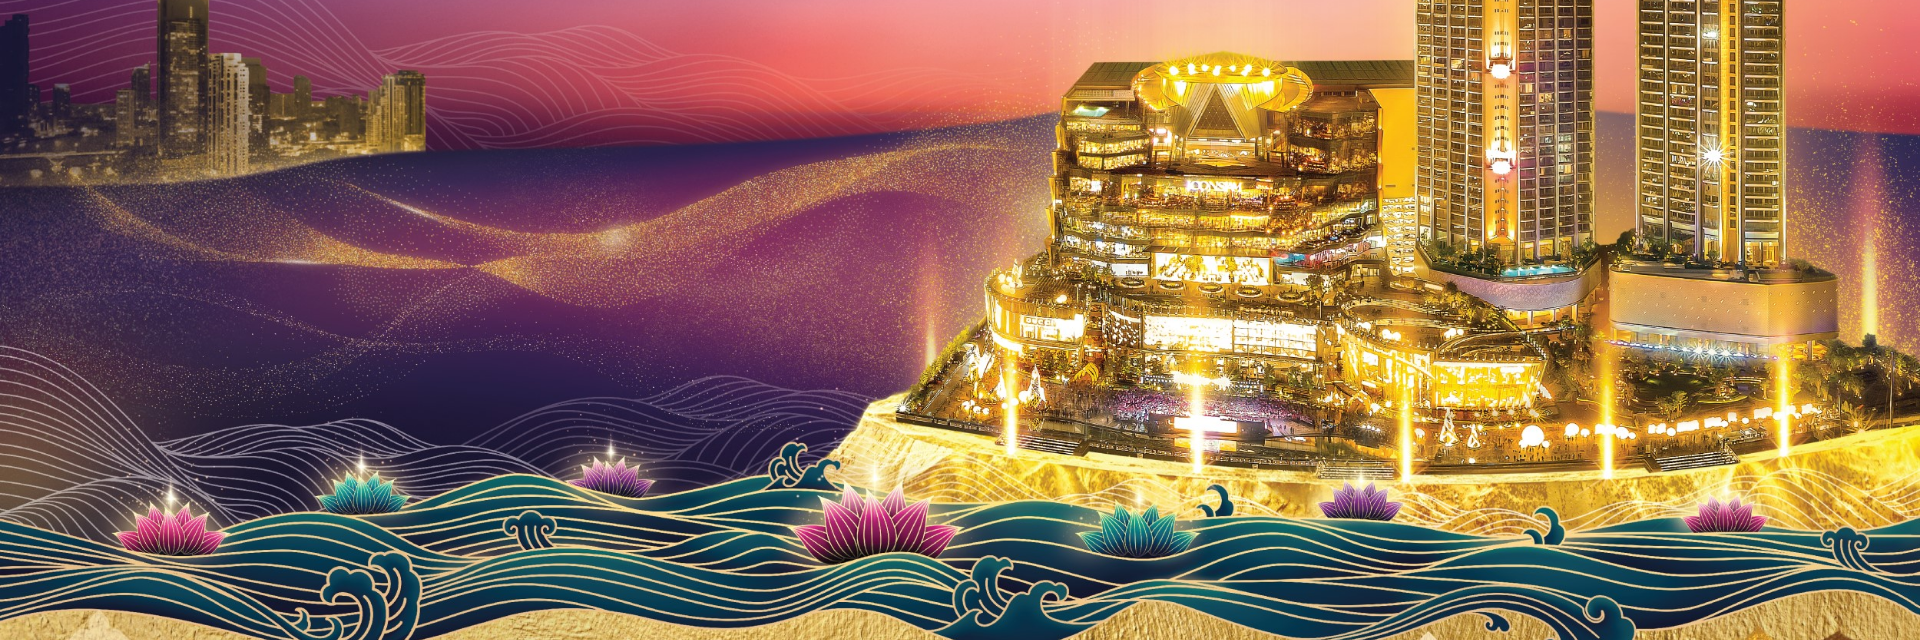 ICONSIAM Chao Phraya River Of Eternal Prosperity ลอยกระทงบนสายน้ำแห่งความเจริญรุ่งเรือง